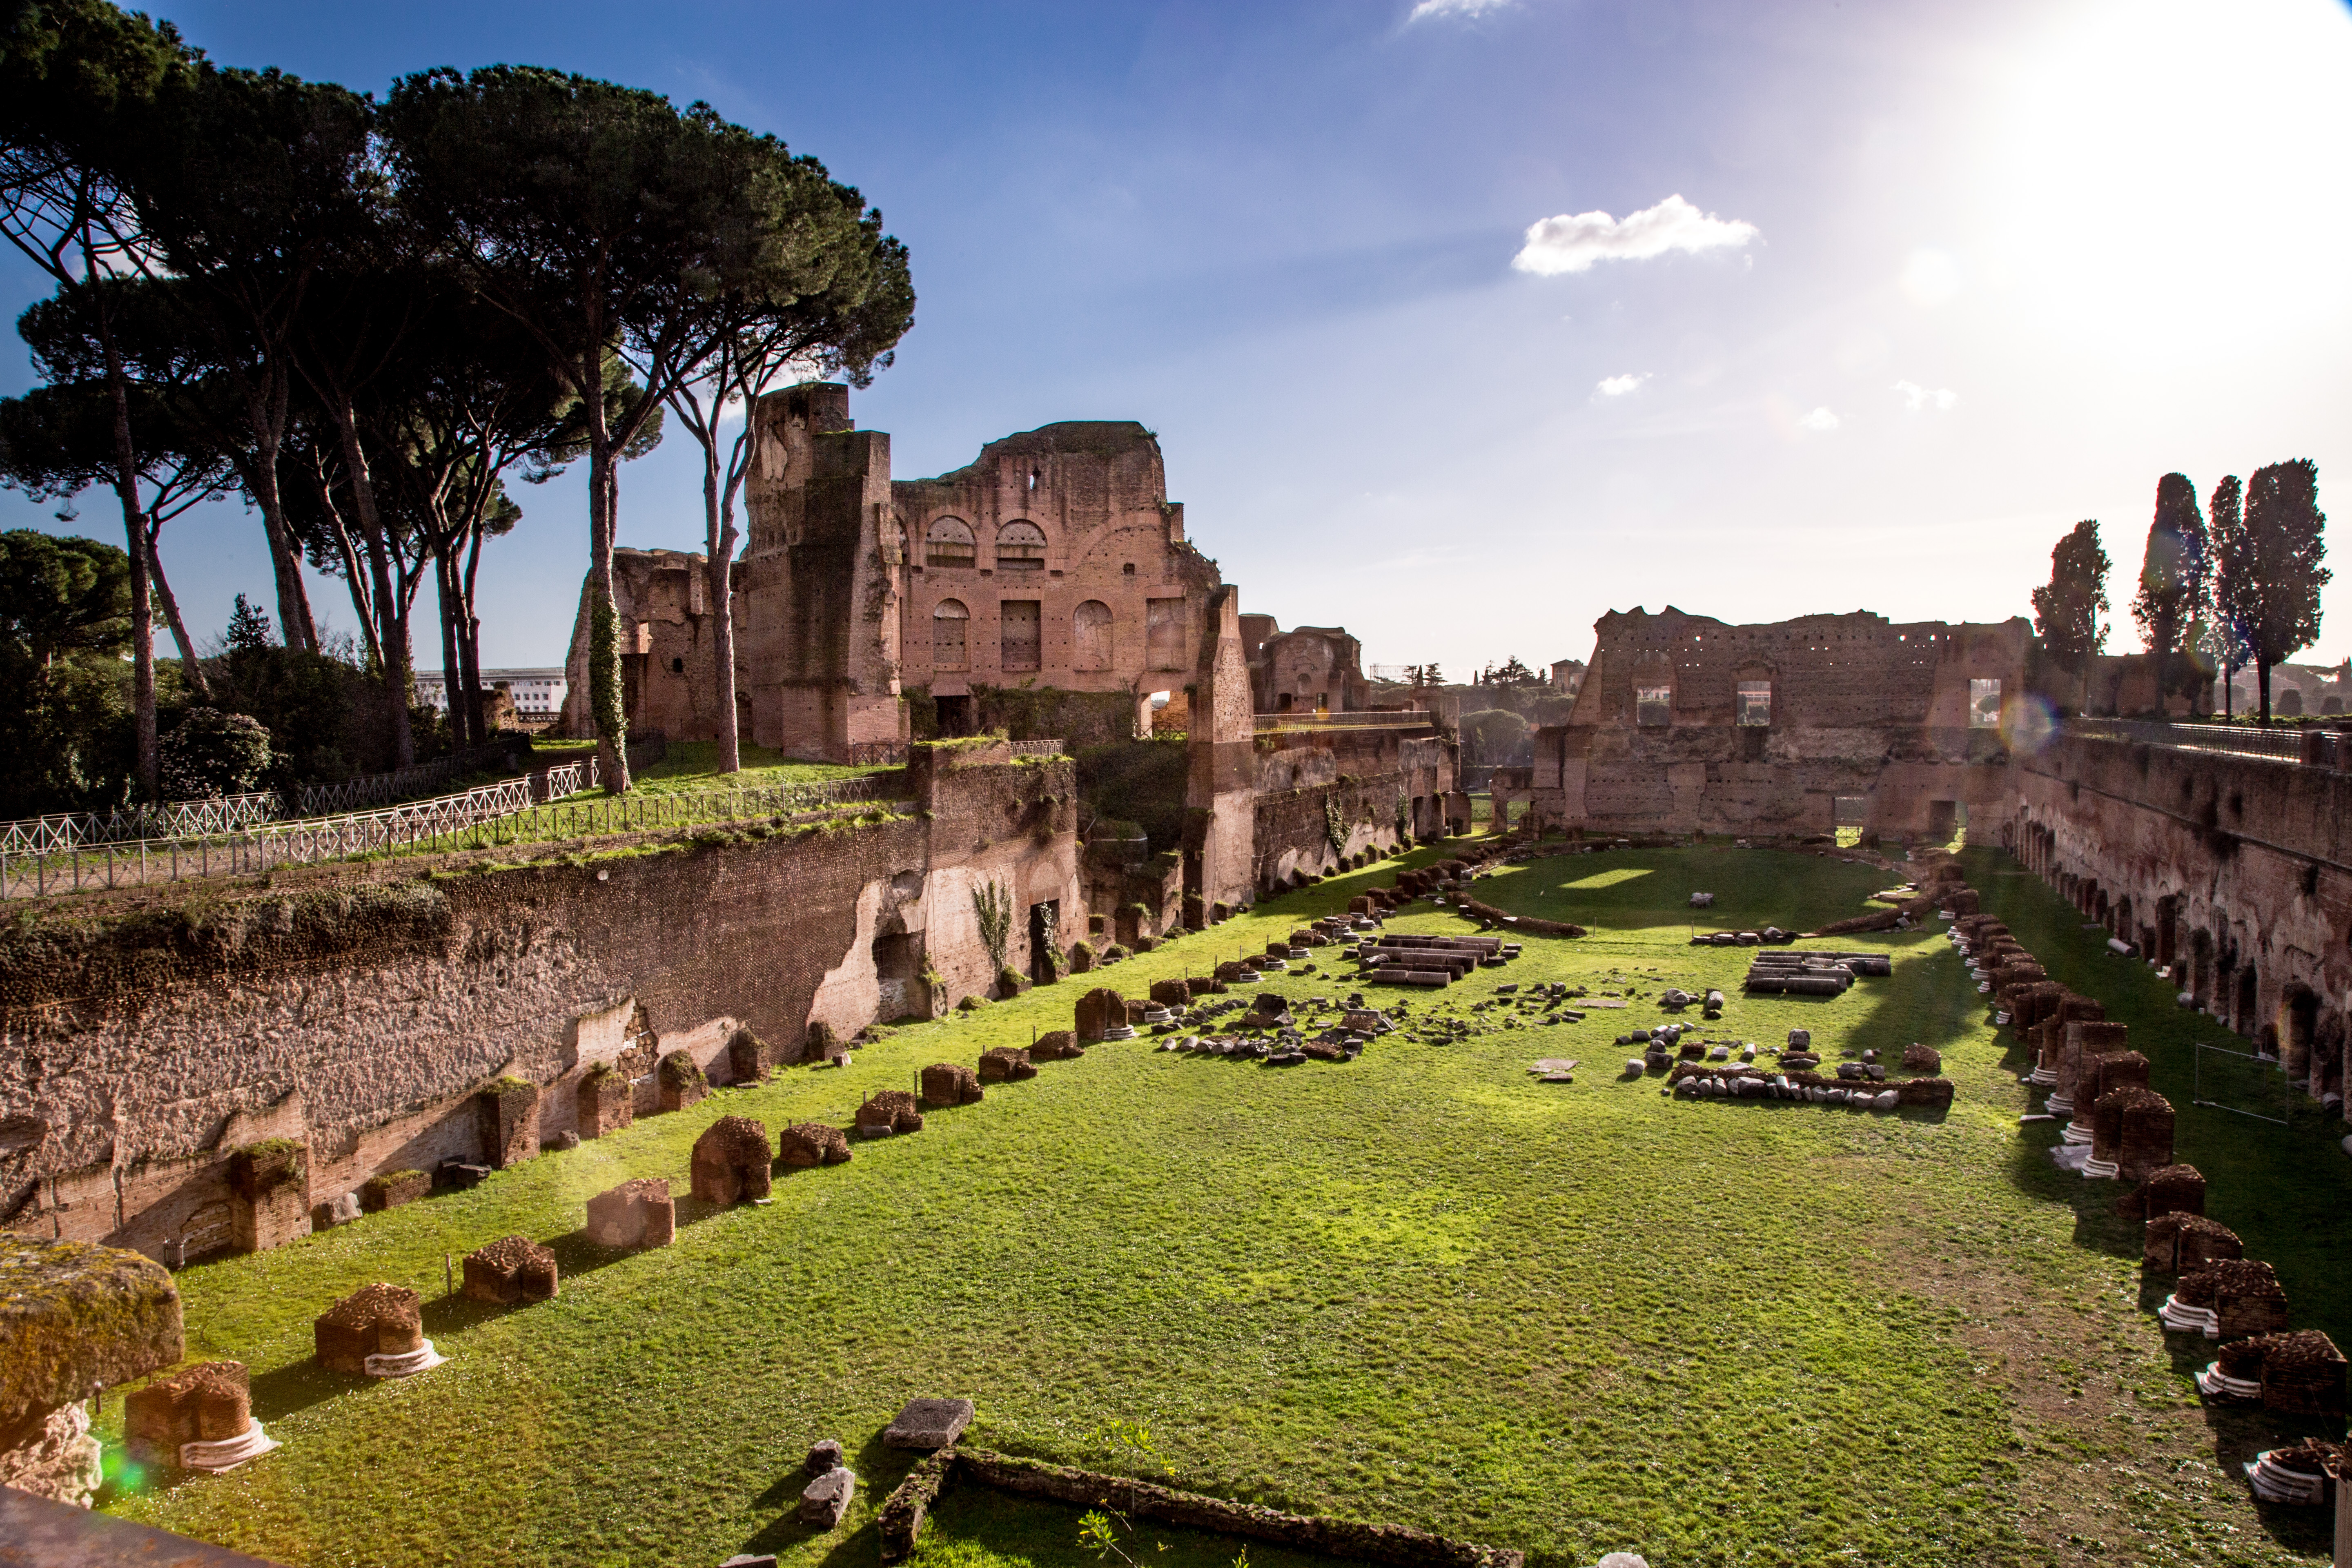 Colosseum, Roman Forum & Palatine Hill Tour